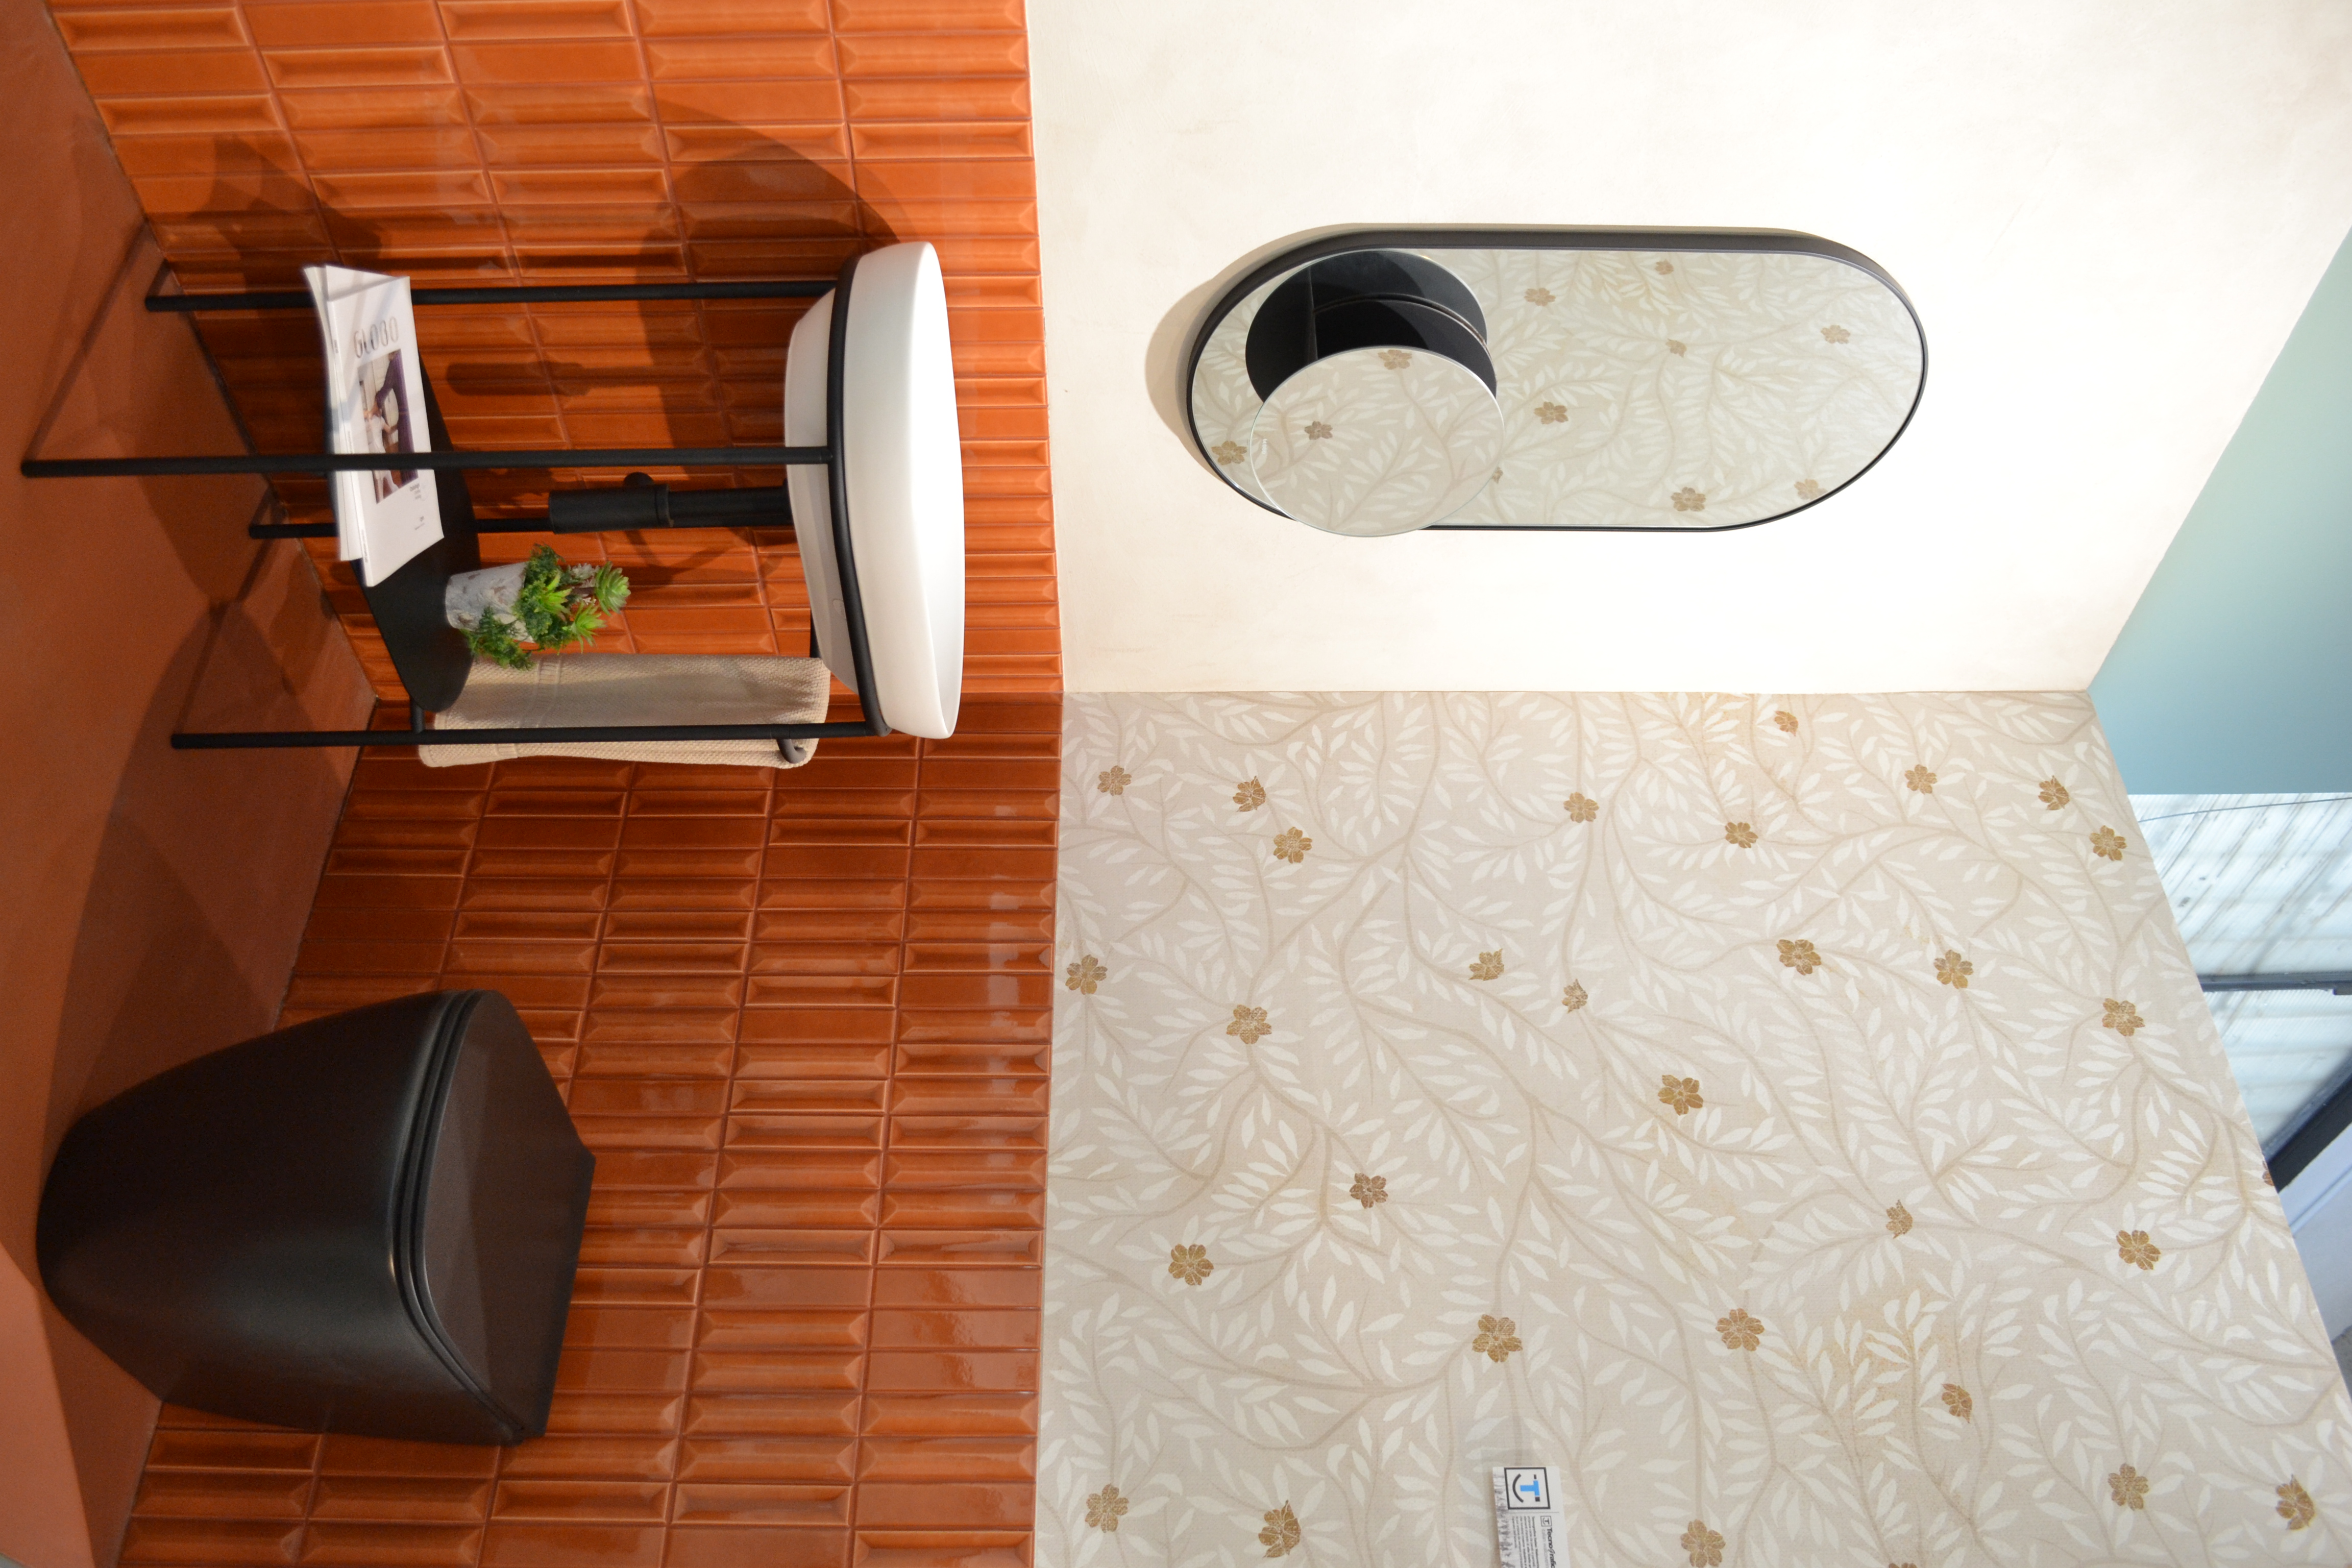 bigmat edilnovelli showroom finiture arredo bagno rubinetteria pavimenti piastrelle ceramiche parquet roma